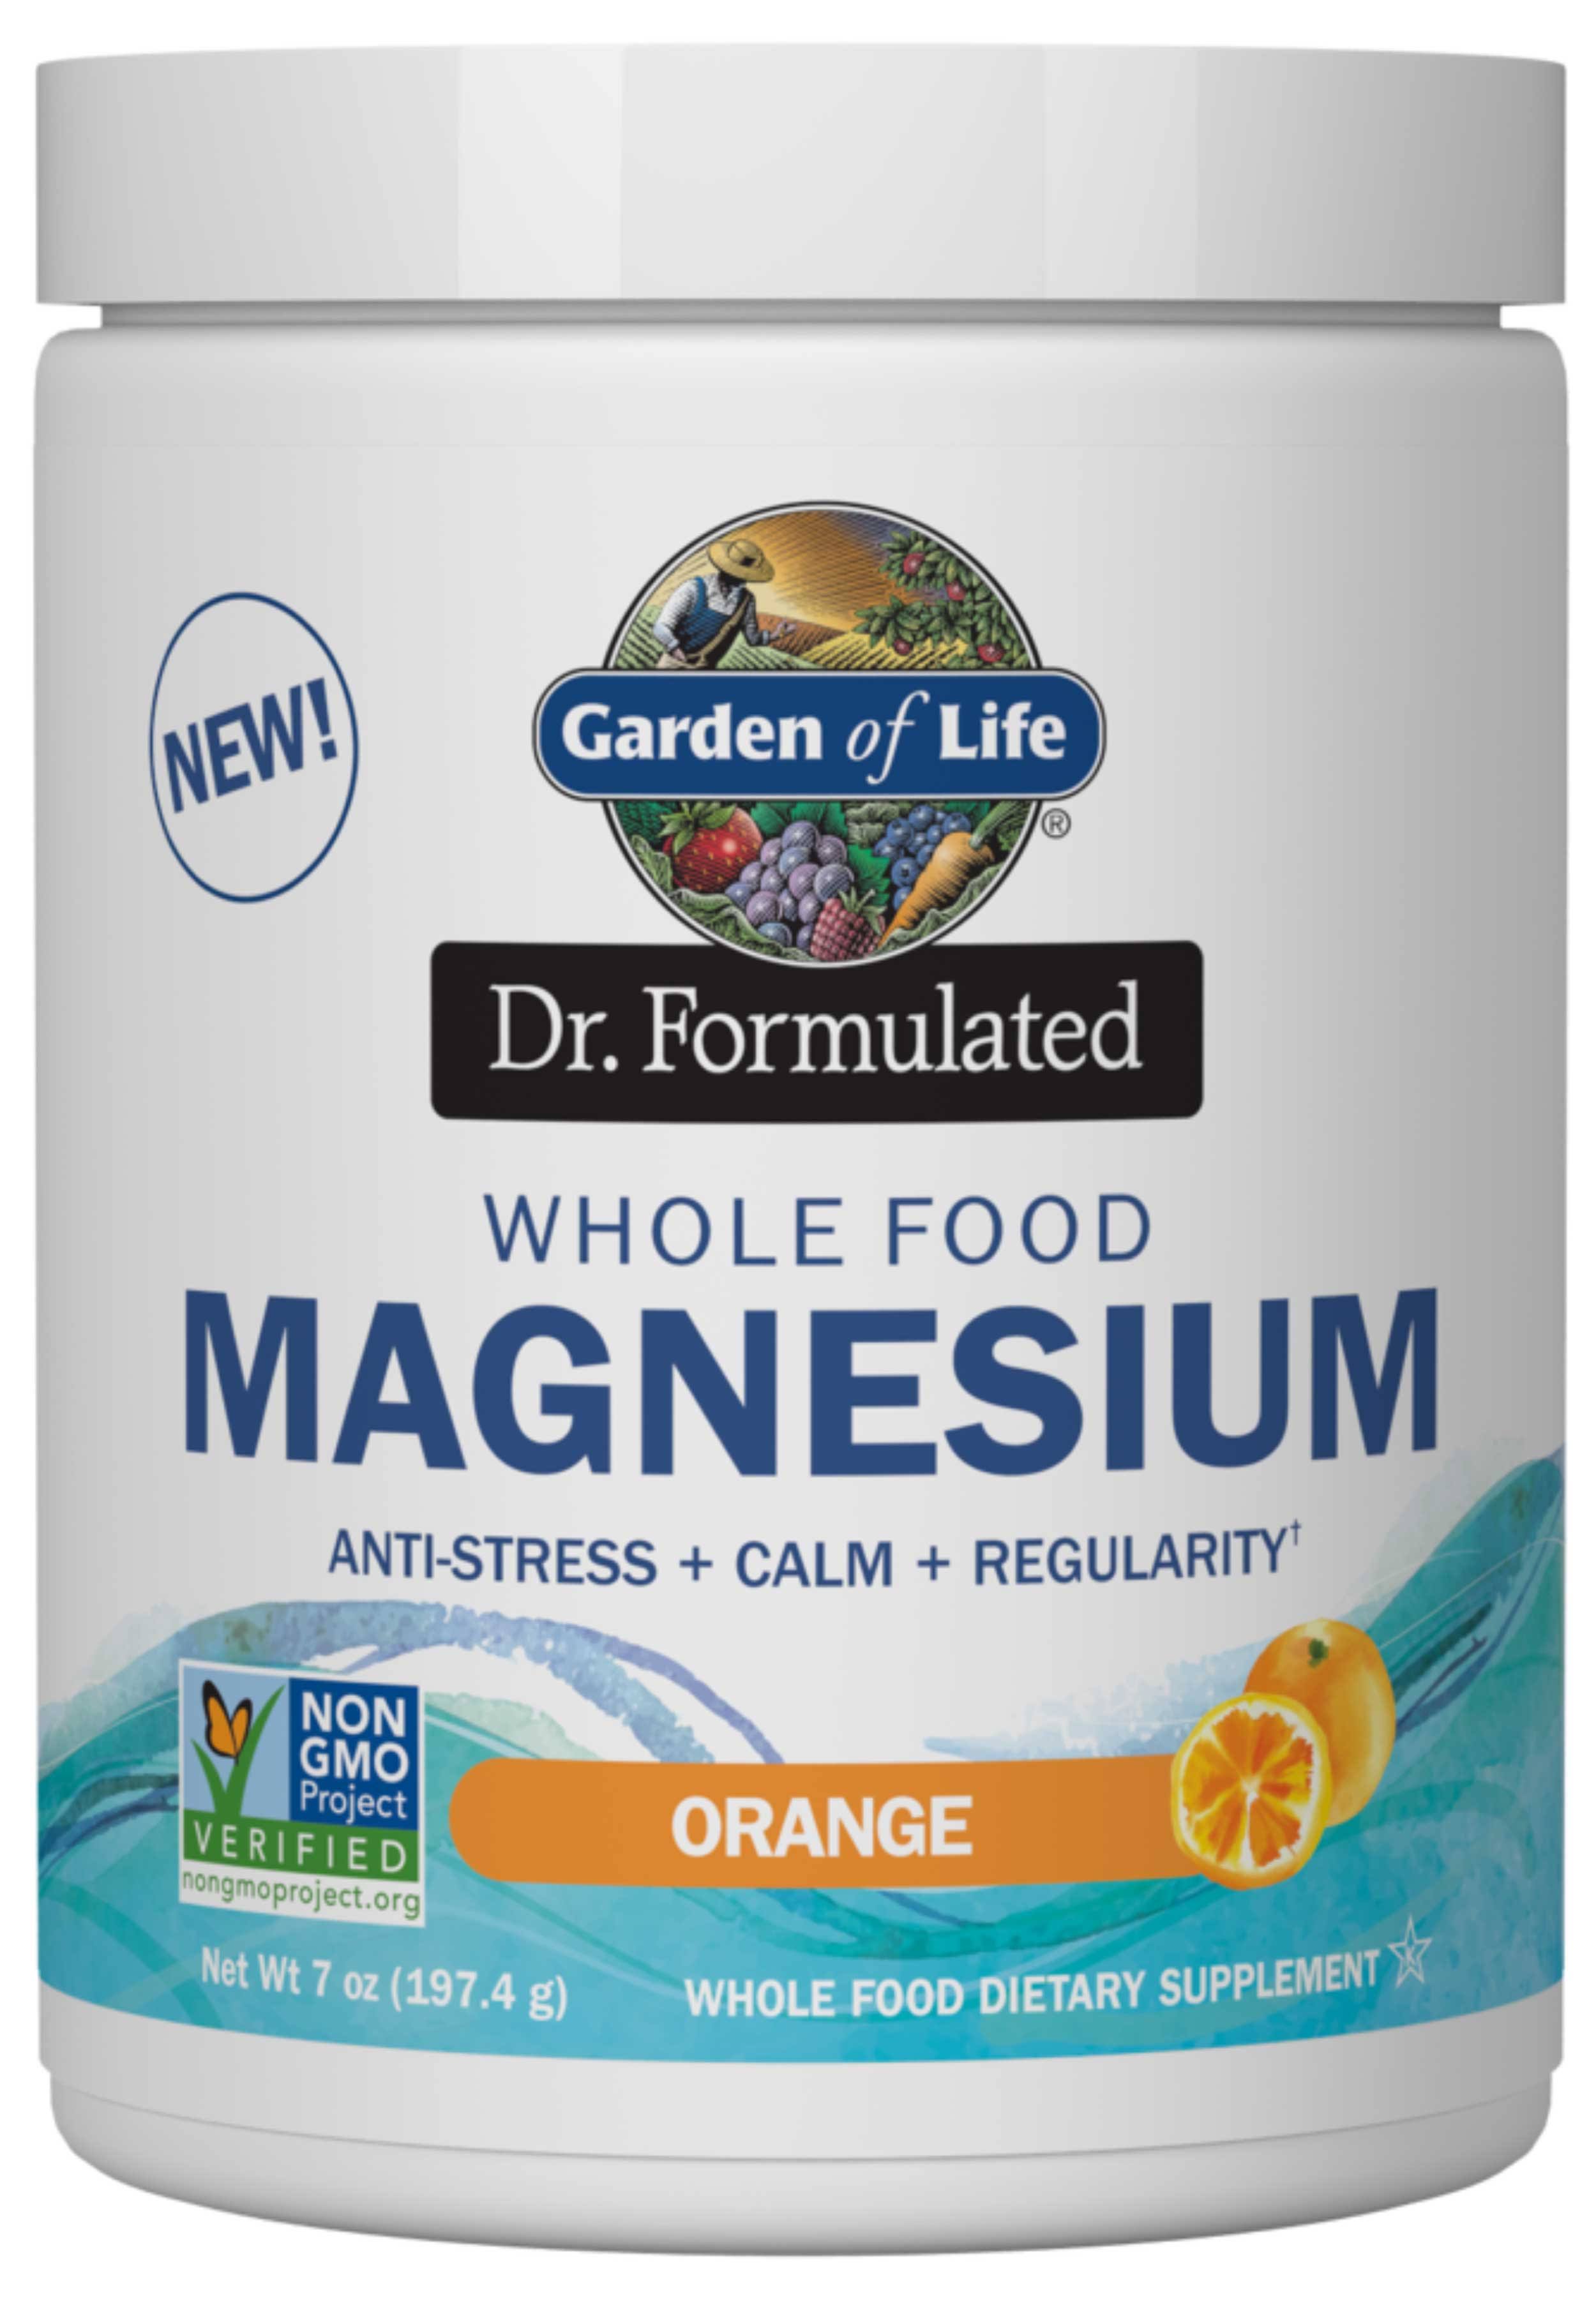 Garden of Life Dr. Formulated Whole Food Magnesium - Orange 7oz